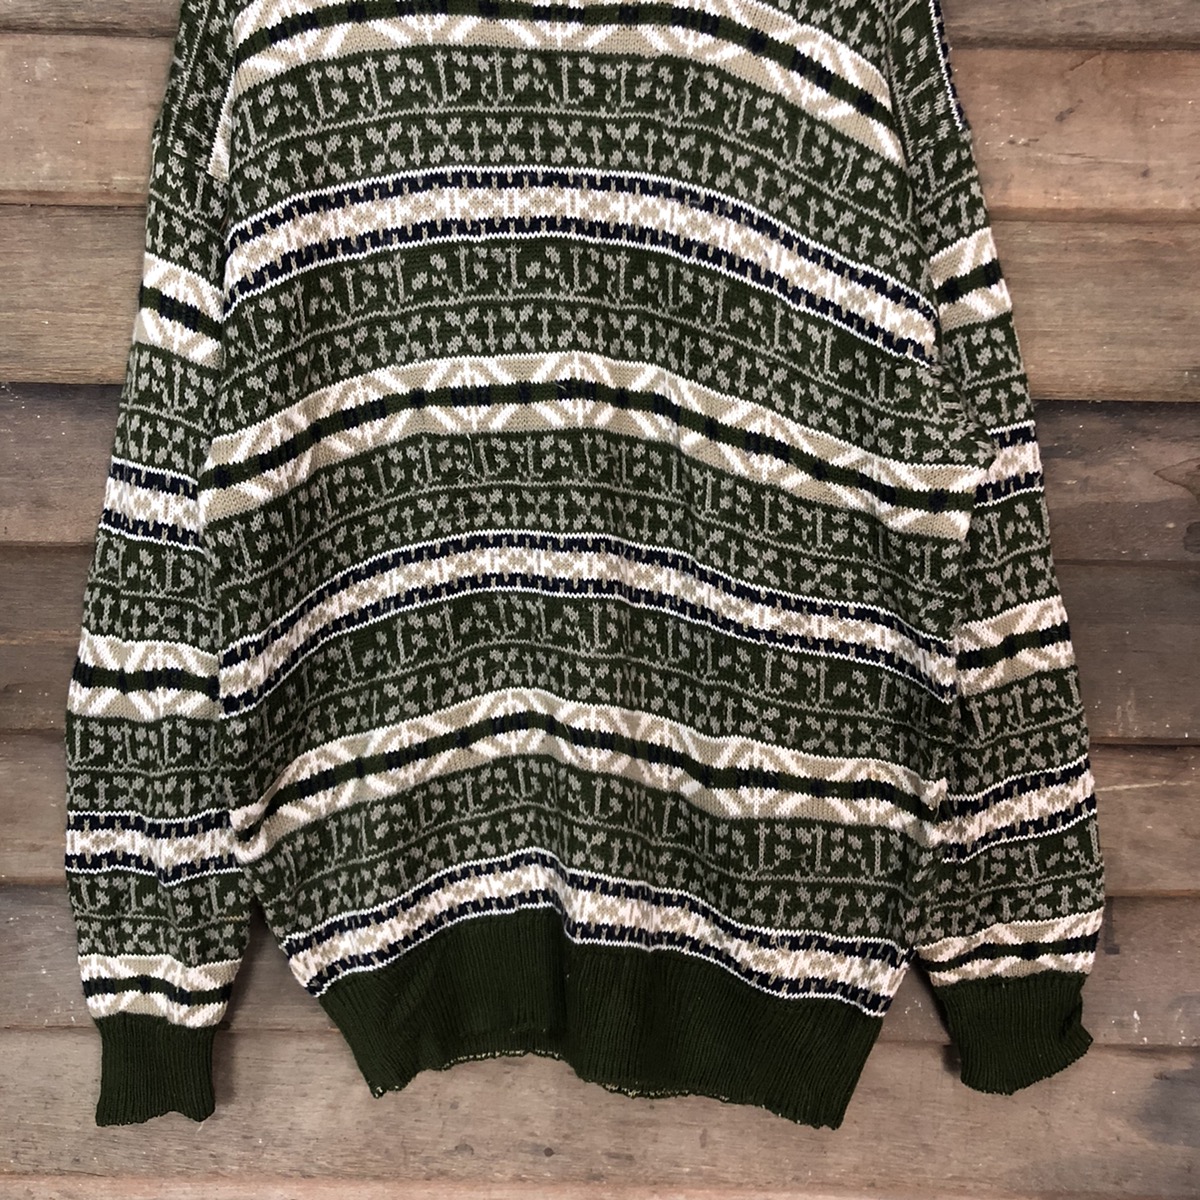 Homespun Knitwear - Yes Pleeze Patterned Knit Sweater - 8